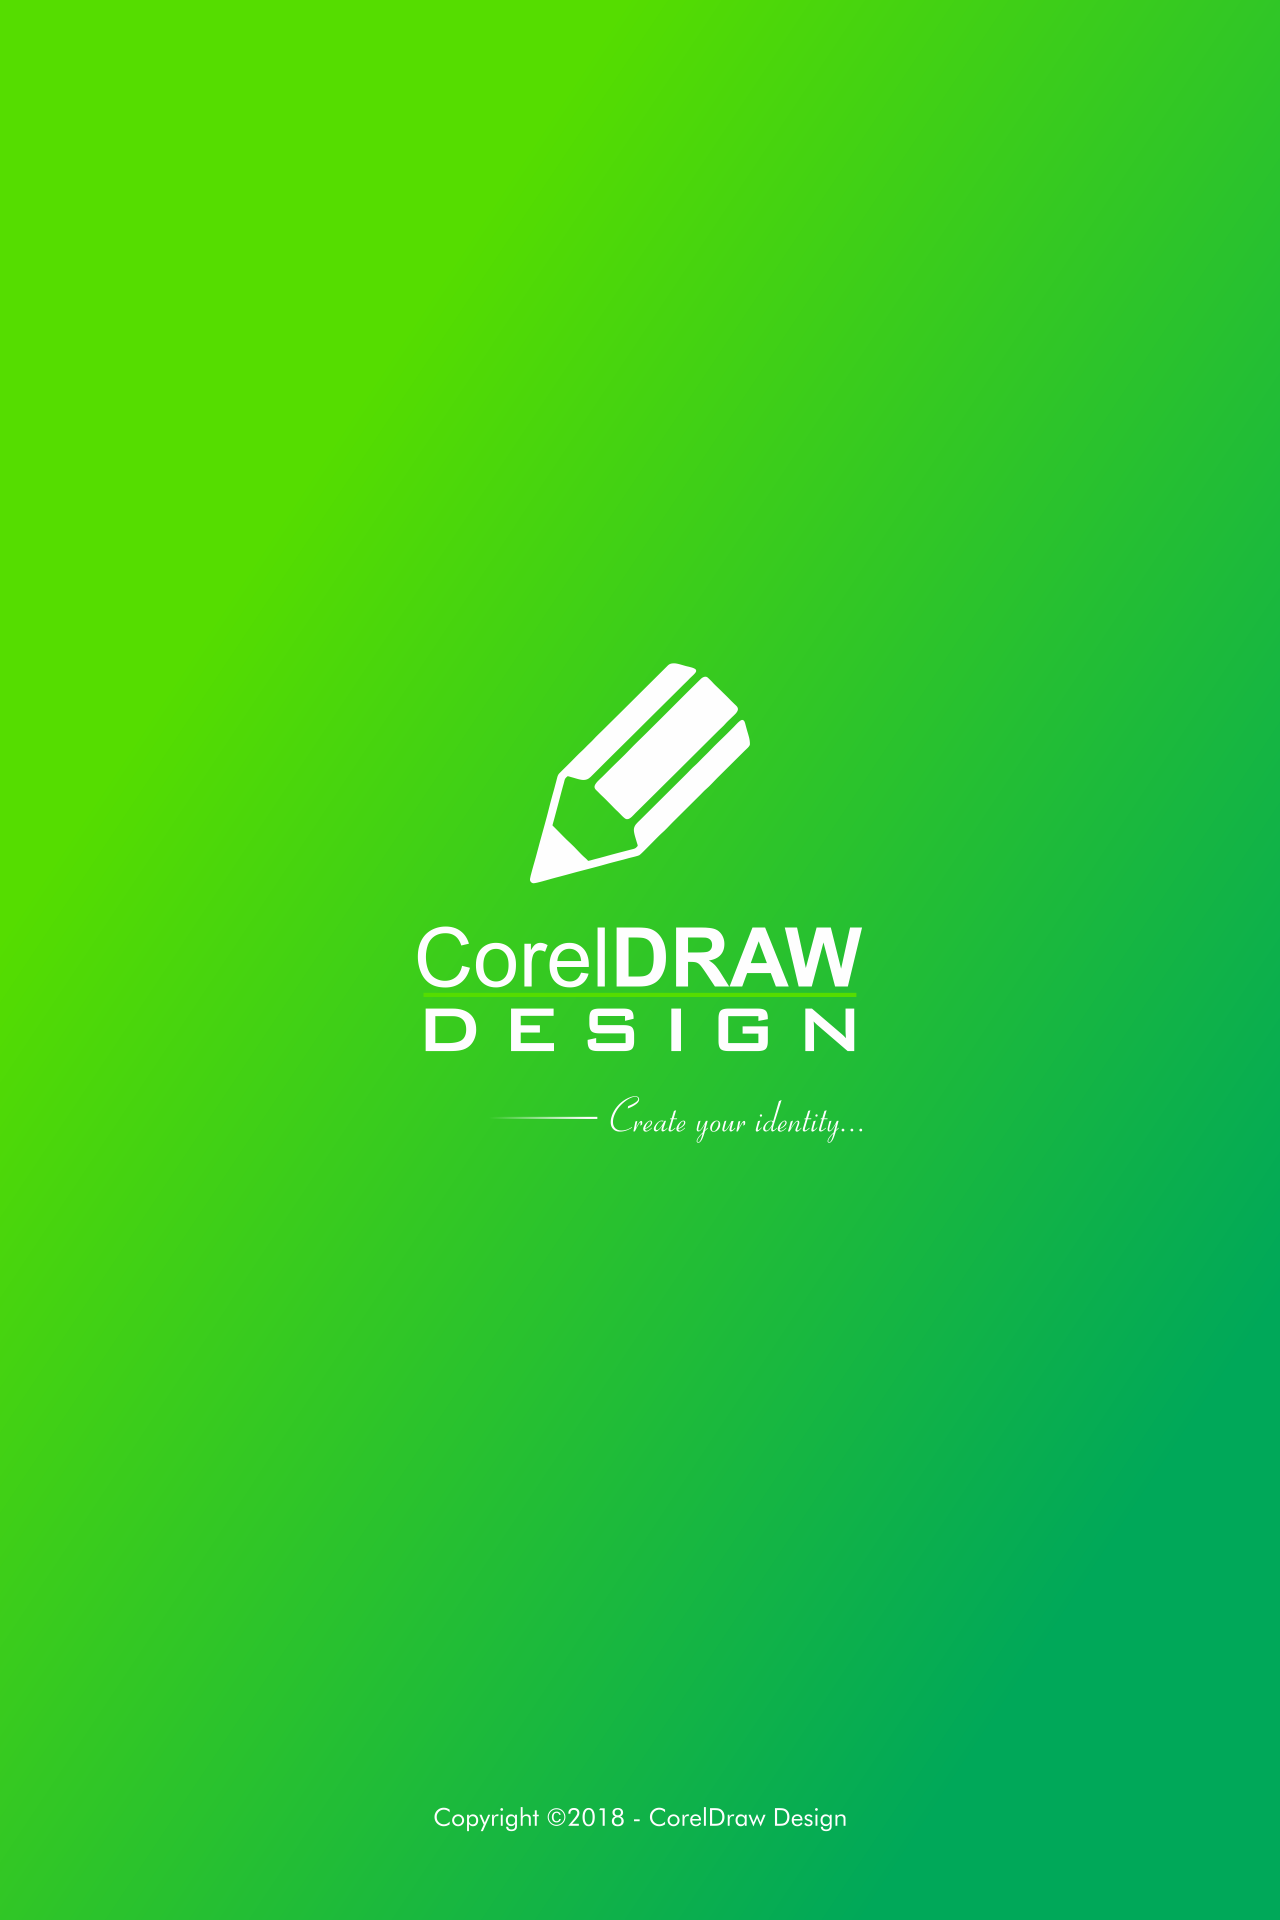 Coreldraw Design Templates Free Download